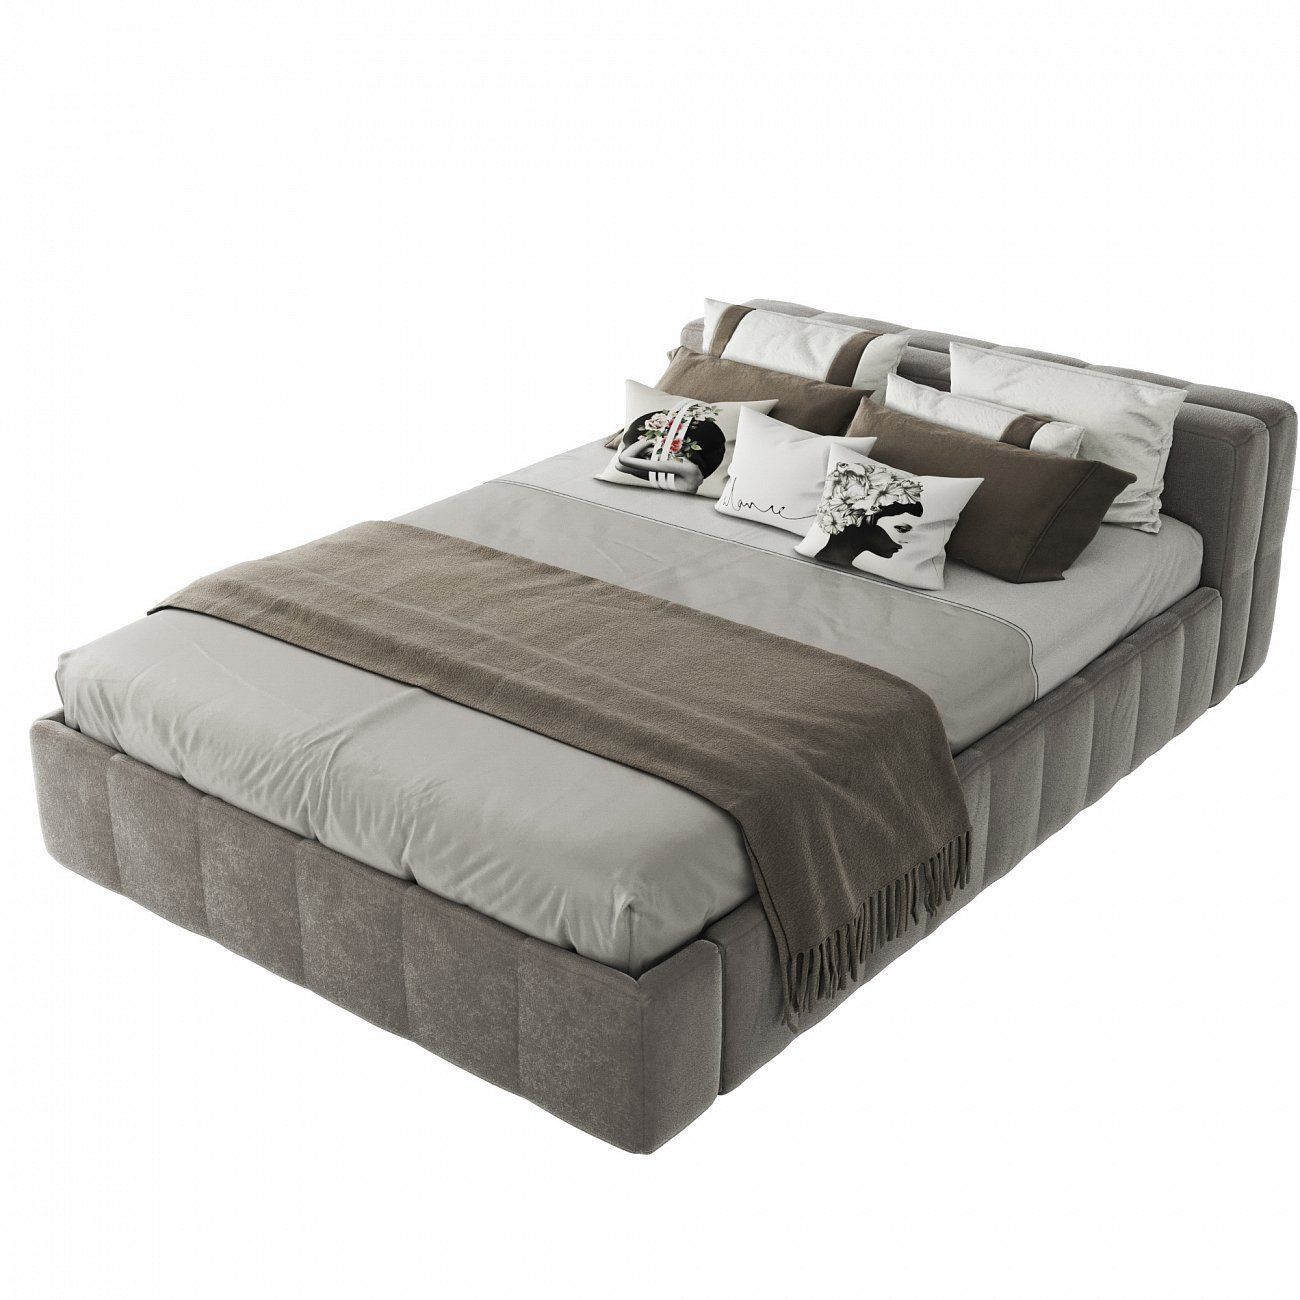 Bonaldo teenage bed 140x200 cm beige